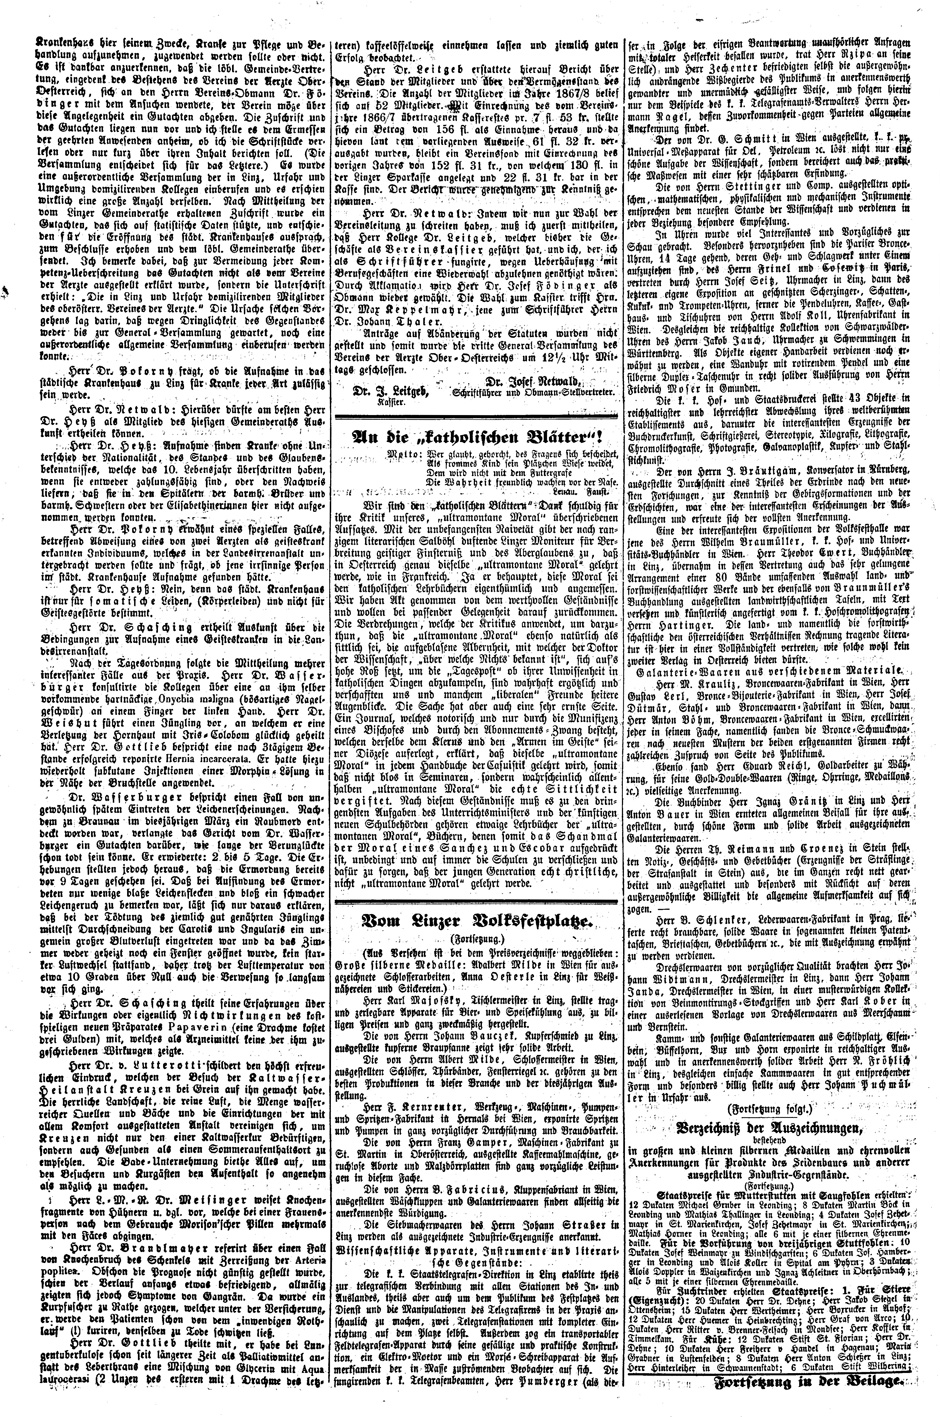 Linzer Tages-Post, 18.9.1868, Seite 2